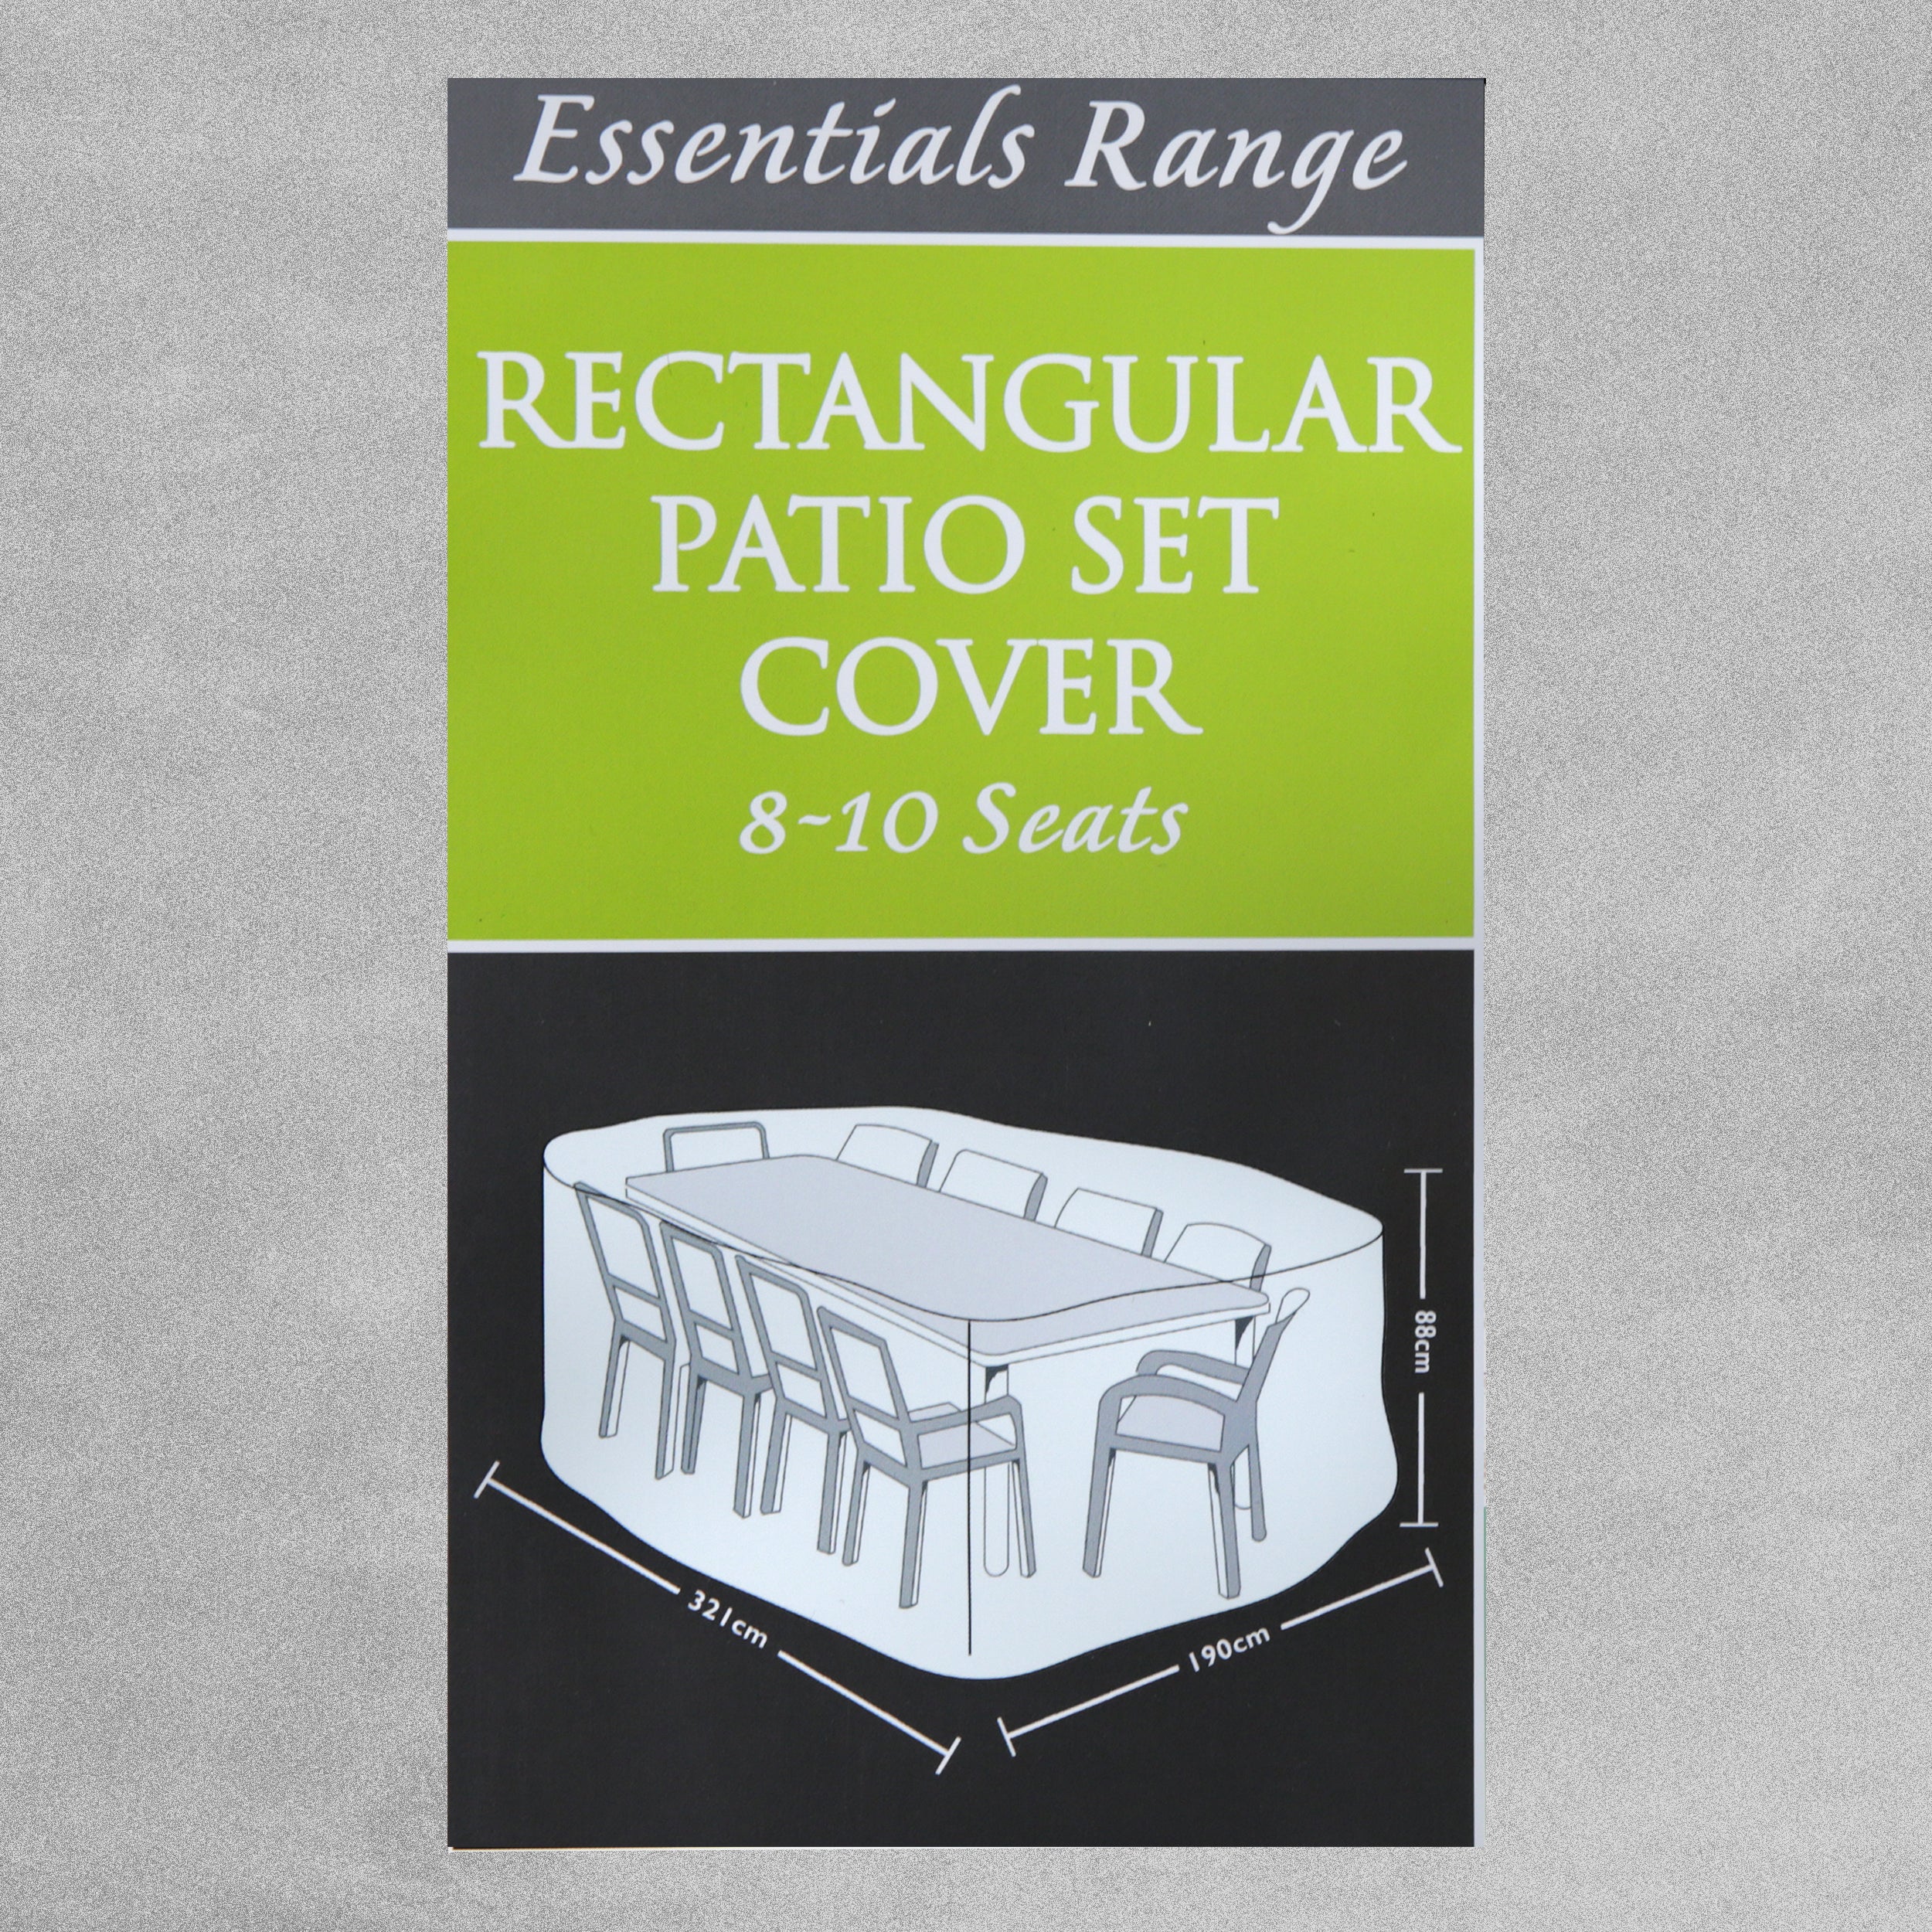 Tom Chambers Essentials Range Garden Covers - Rectangular Patio Set Cover 8-10 Seats - Green/Black